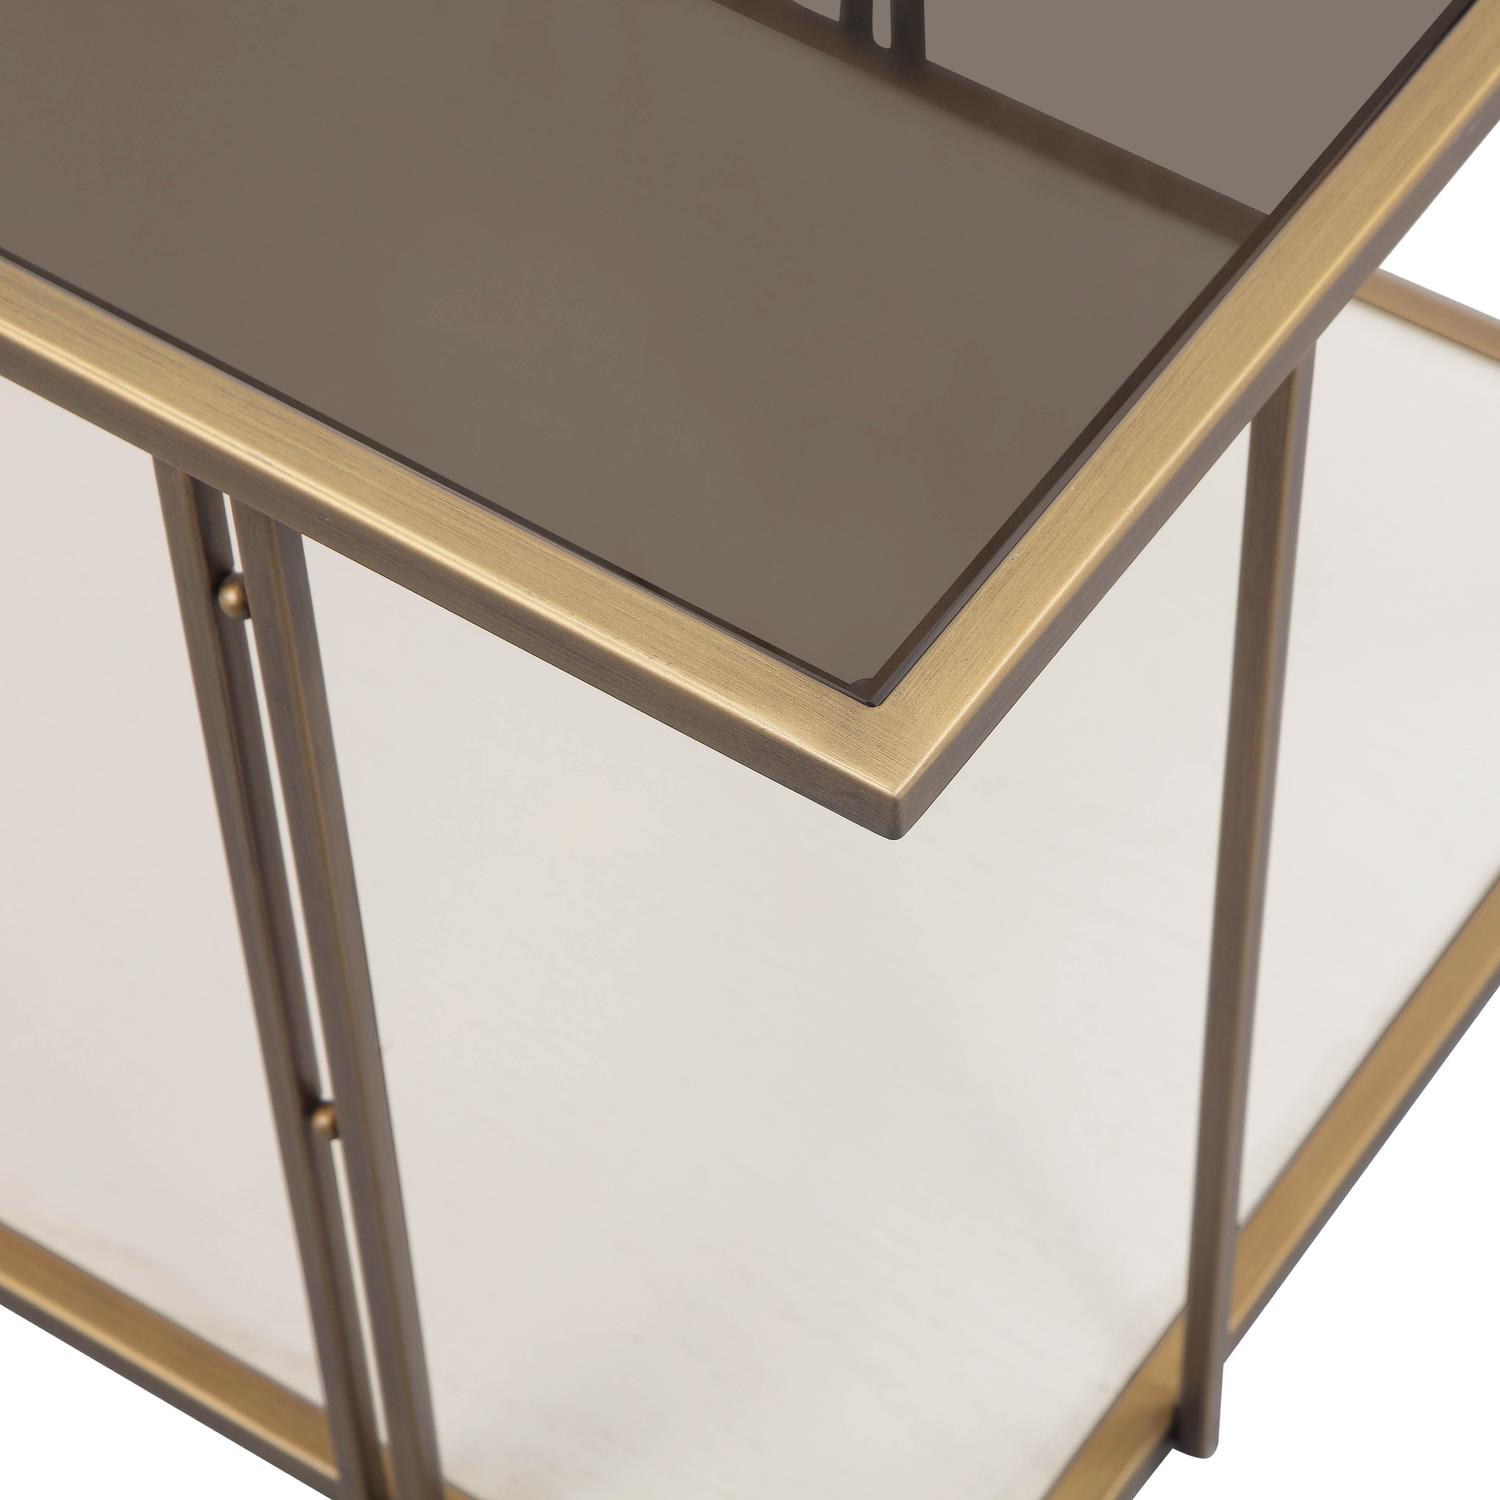 3 piece coffee table set ikea Contemporary Design Furniture Coffee Tables Cream